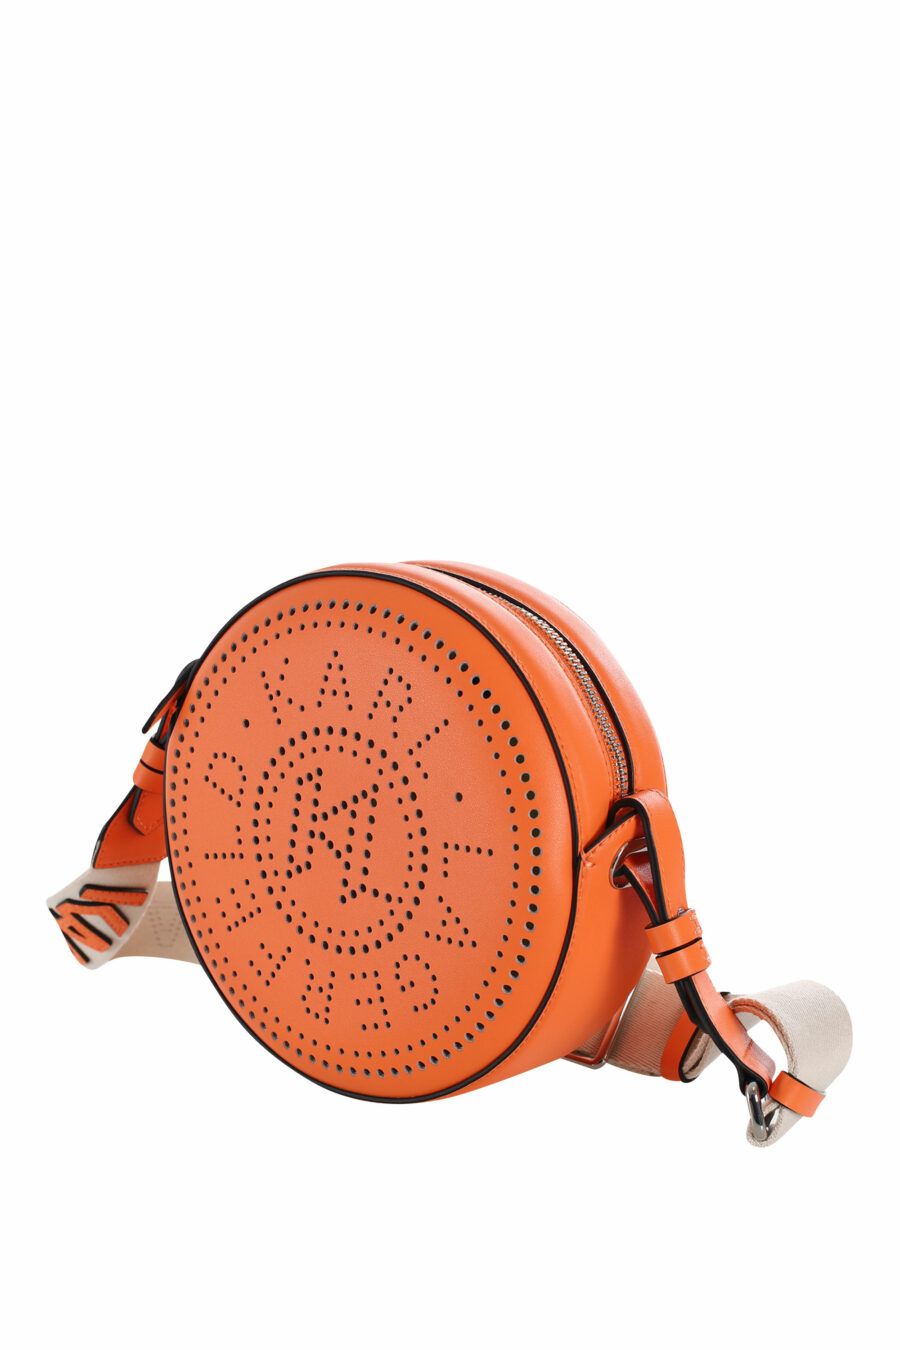 Bolso bandolero naranja circular con logo "k/circle" - 8720744234739 2